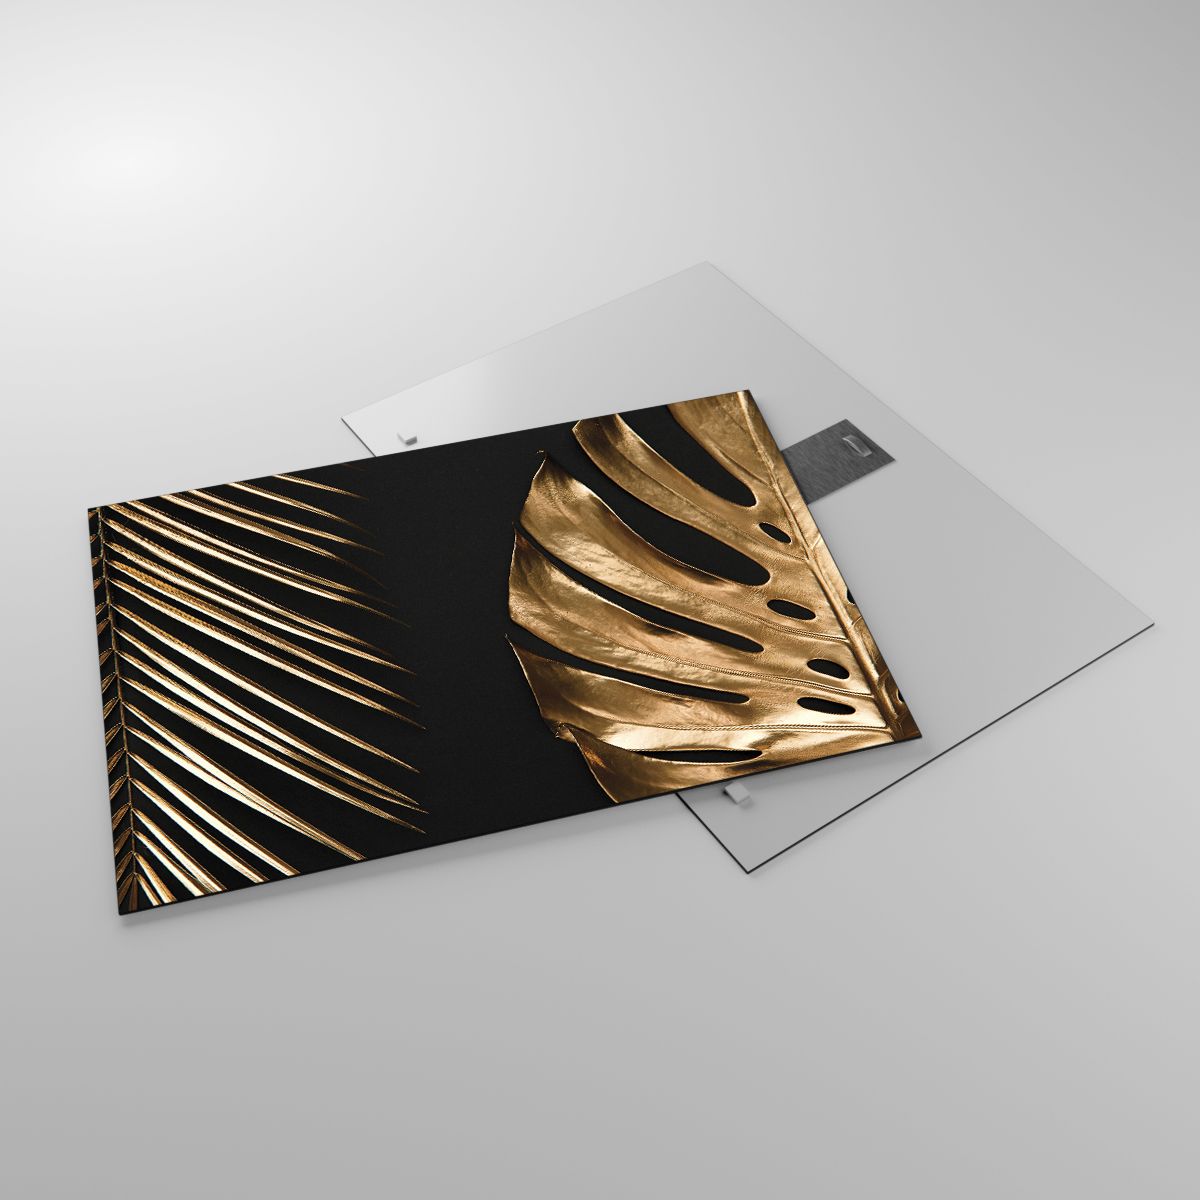 Glasbild Palmblatt, Glasbild Monstera-Blatt, Glasbild Abstraktion, Glasbild Kunst, Glasbild Gold